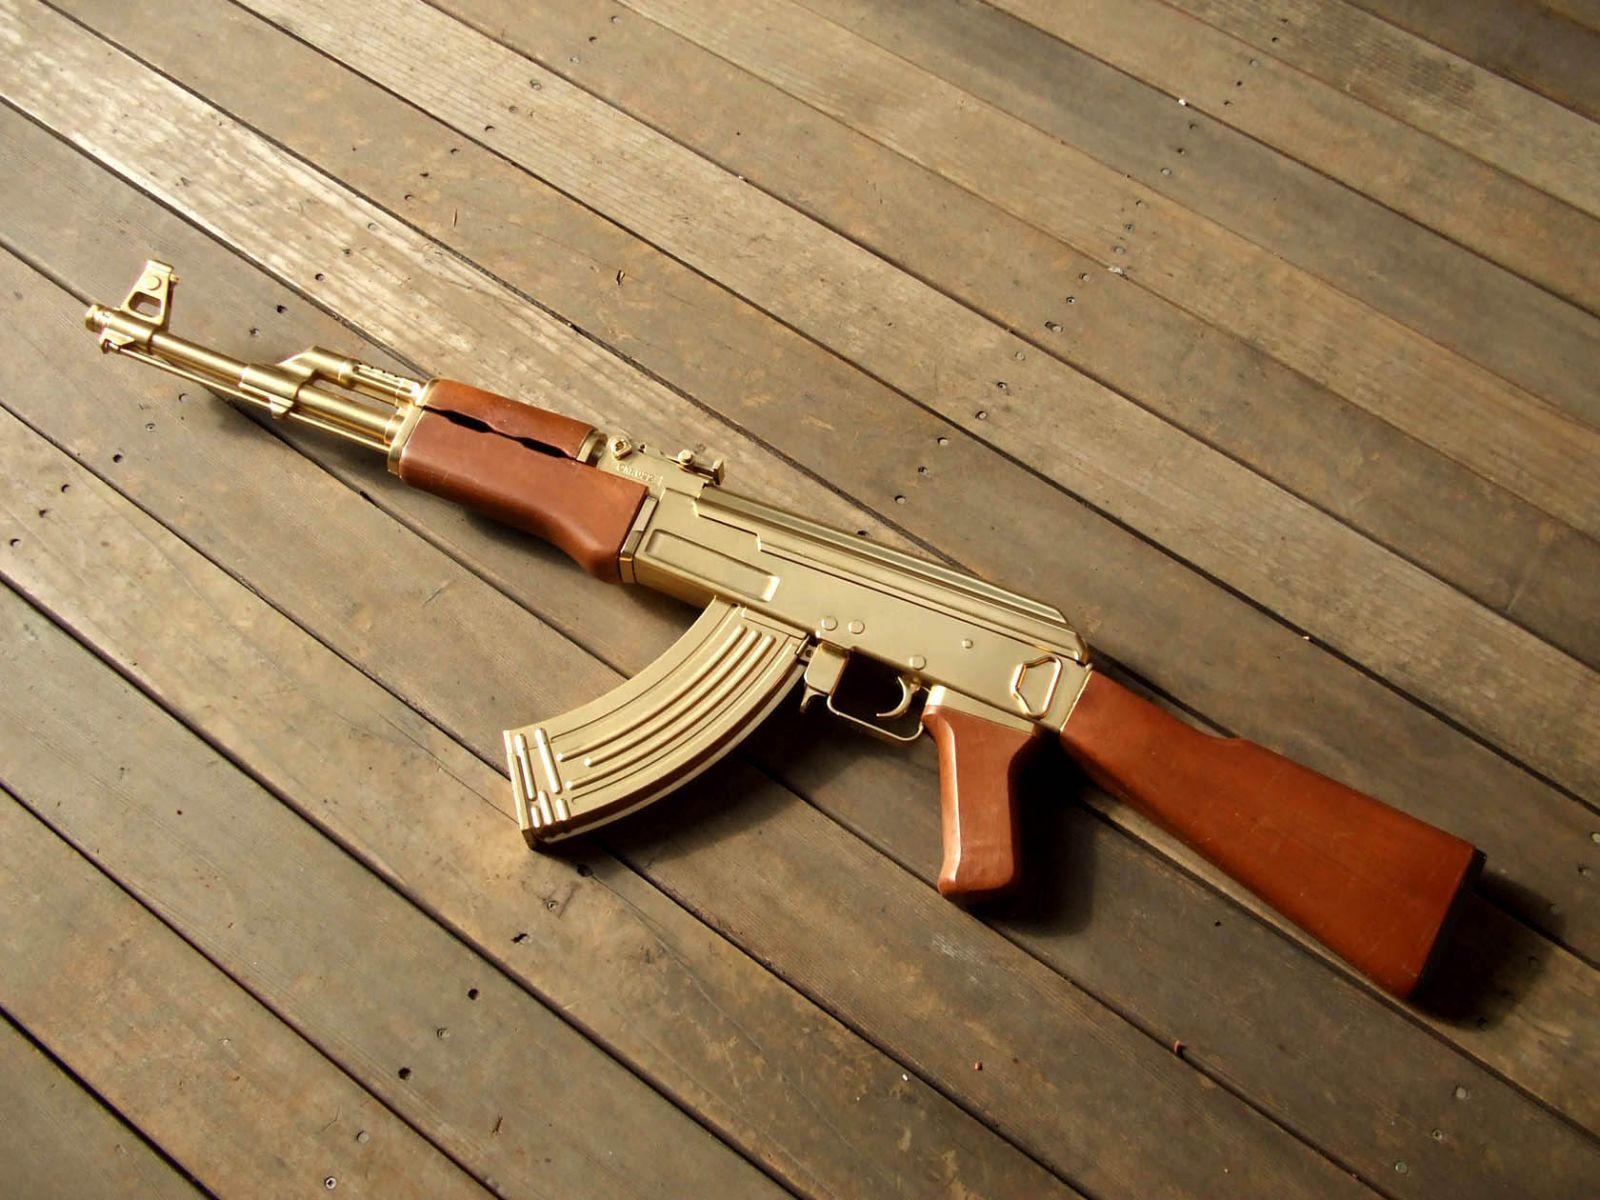 AK 47 Gold Model. HD Guns Wallpaper for Mobile and Desktop